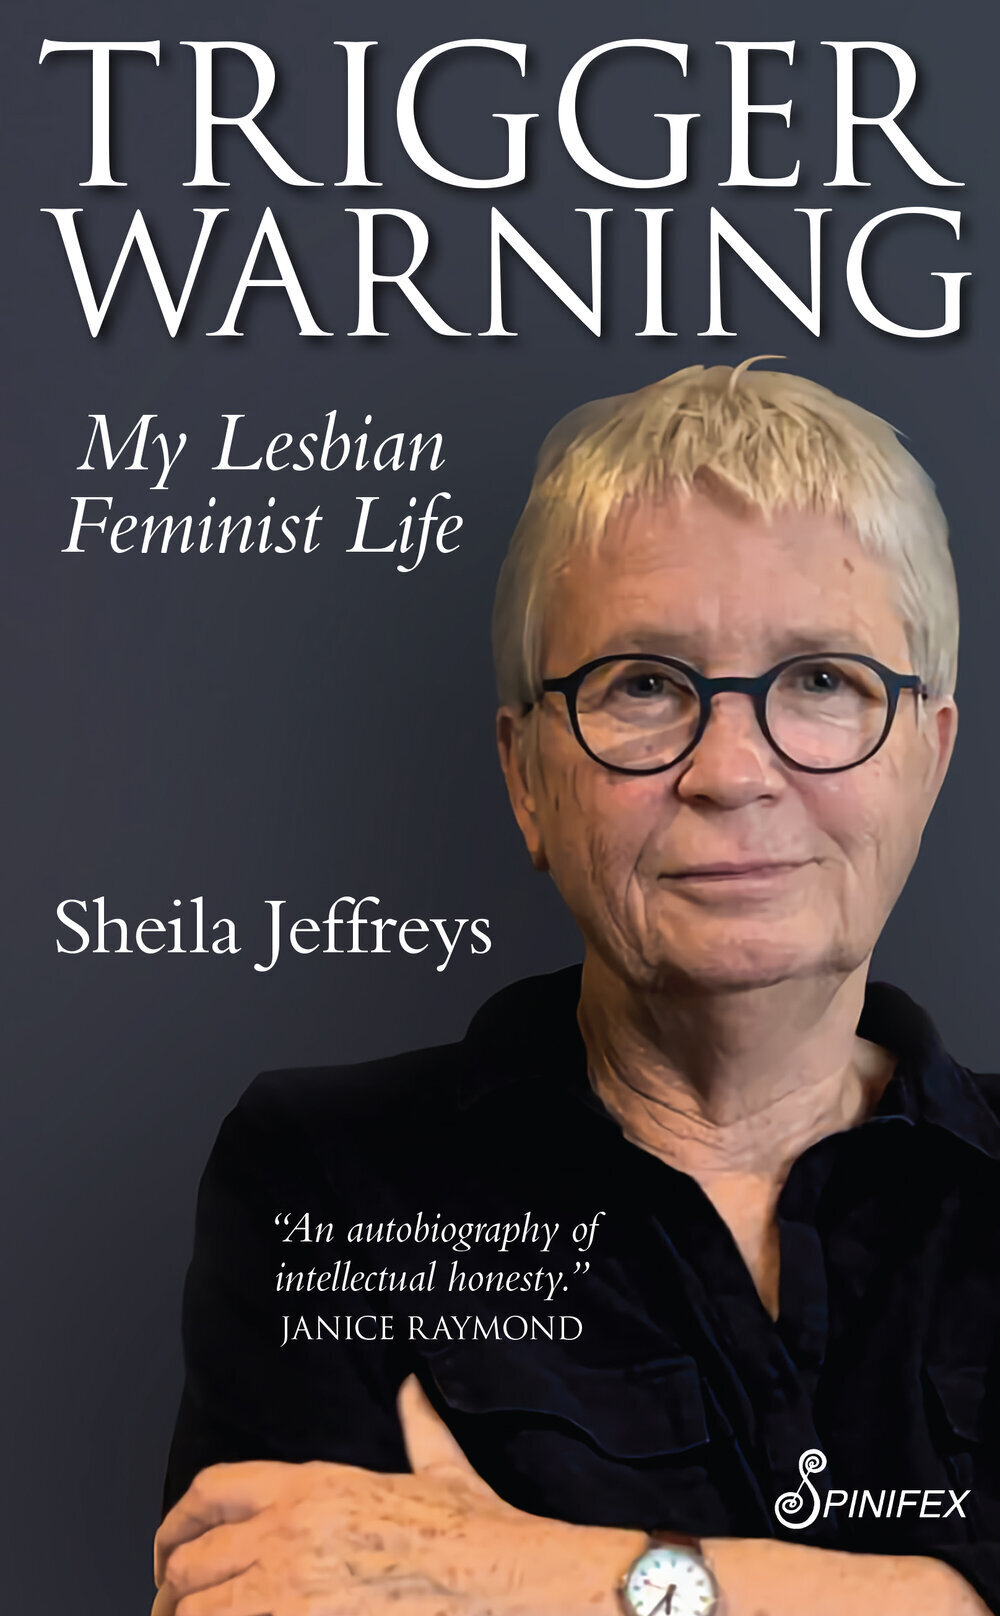 Review Sheila Jeffreyss autobiography